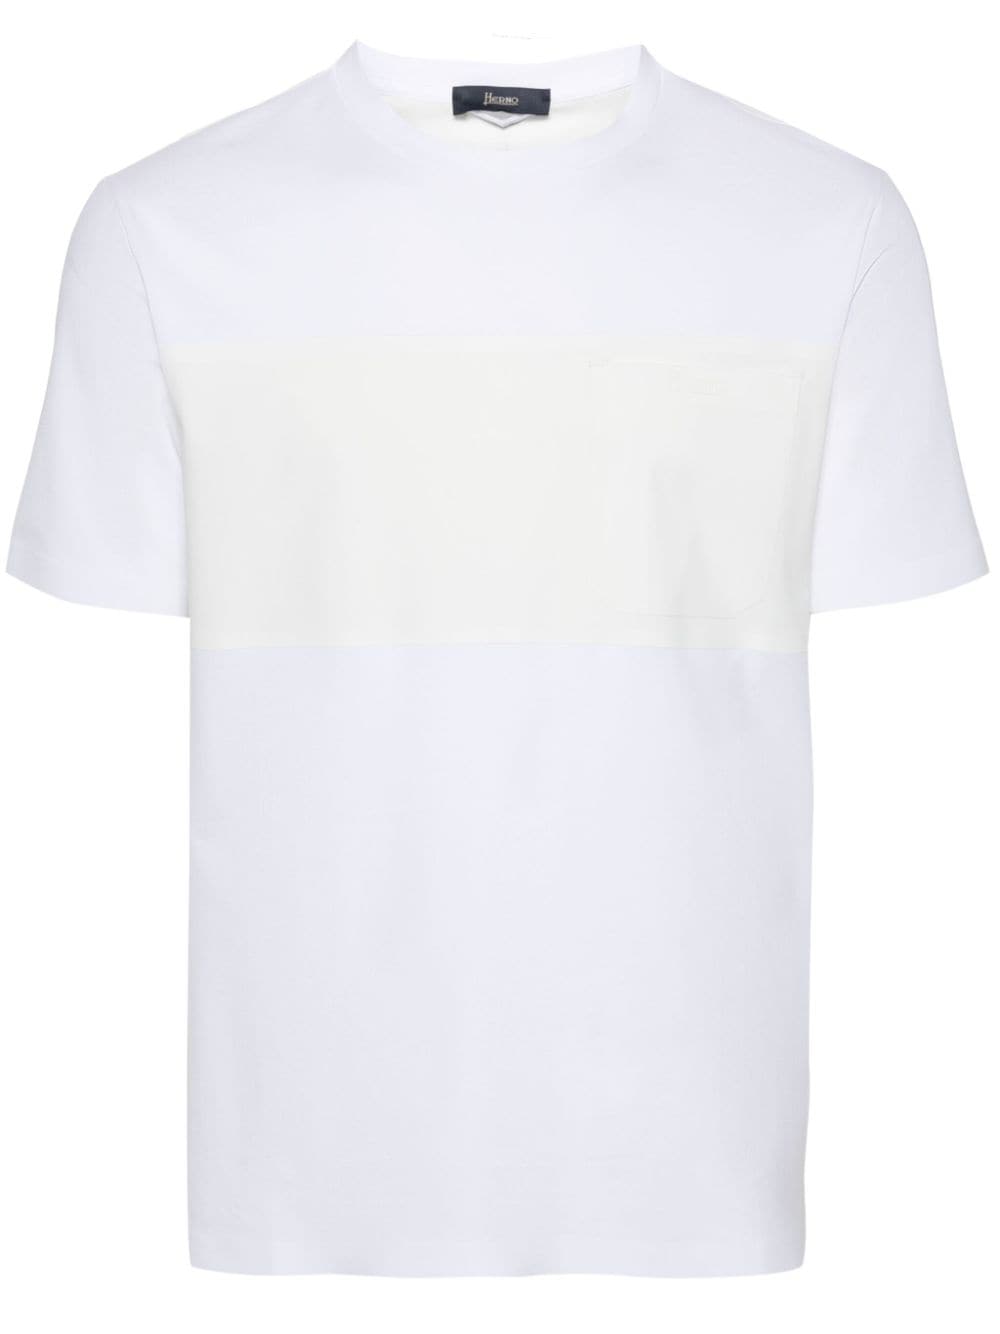 T-shirt bianca con stampa